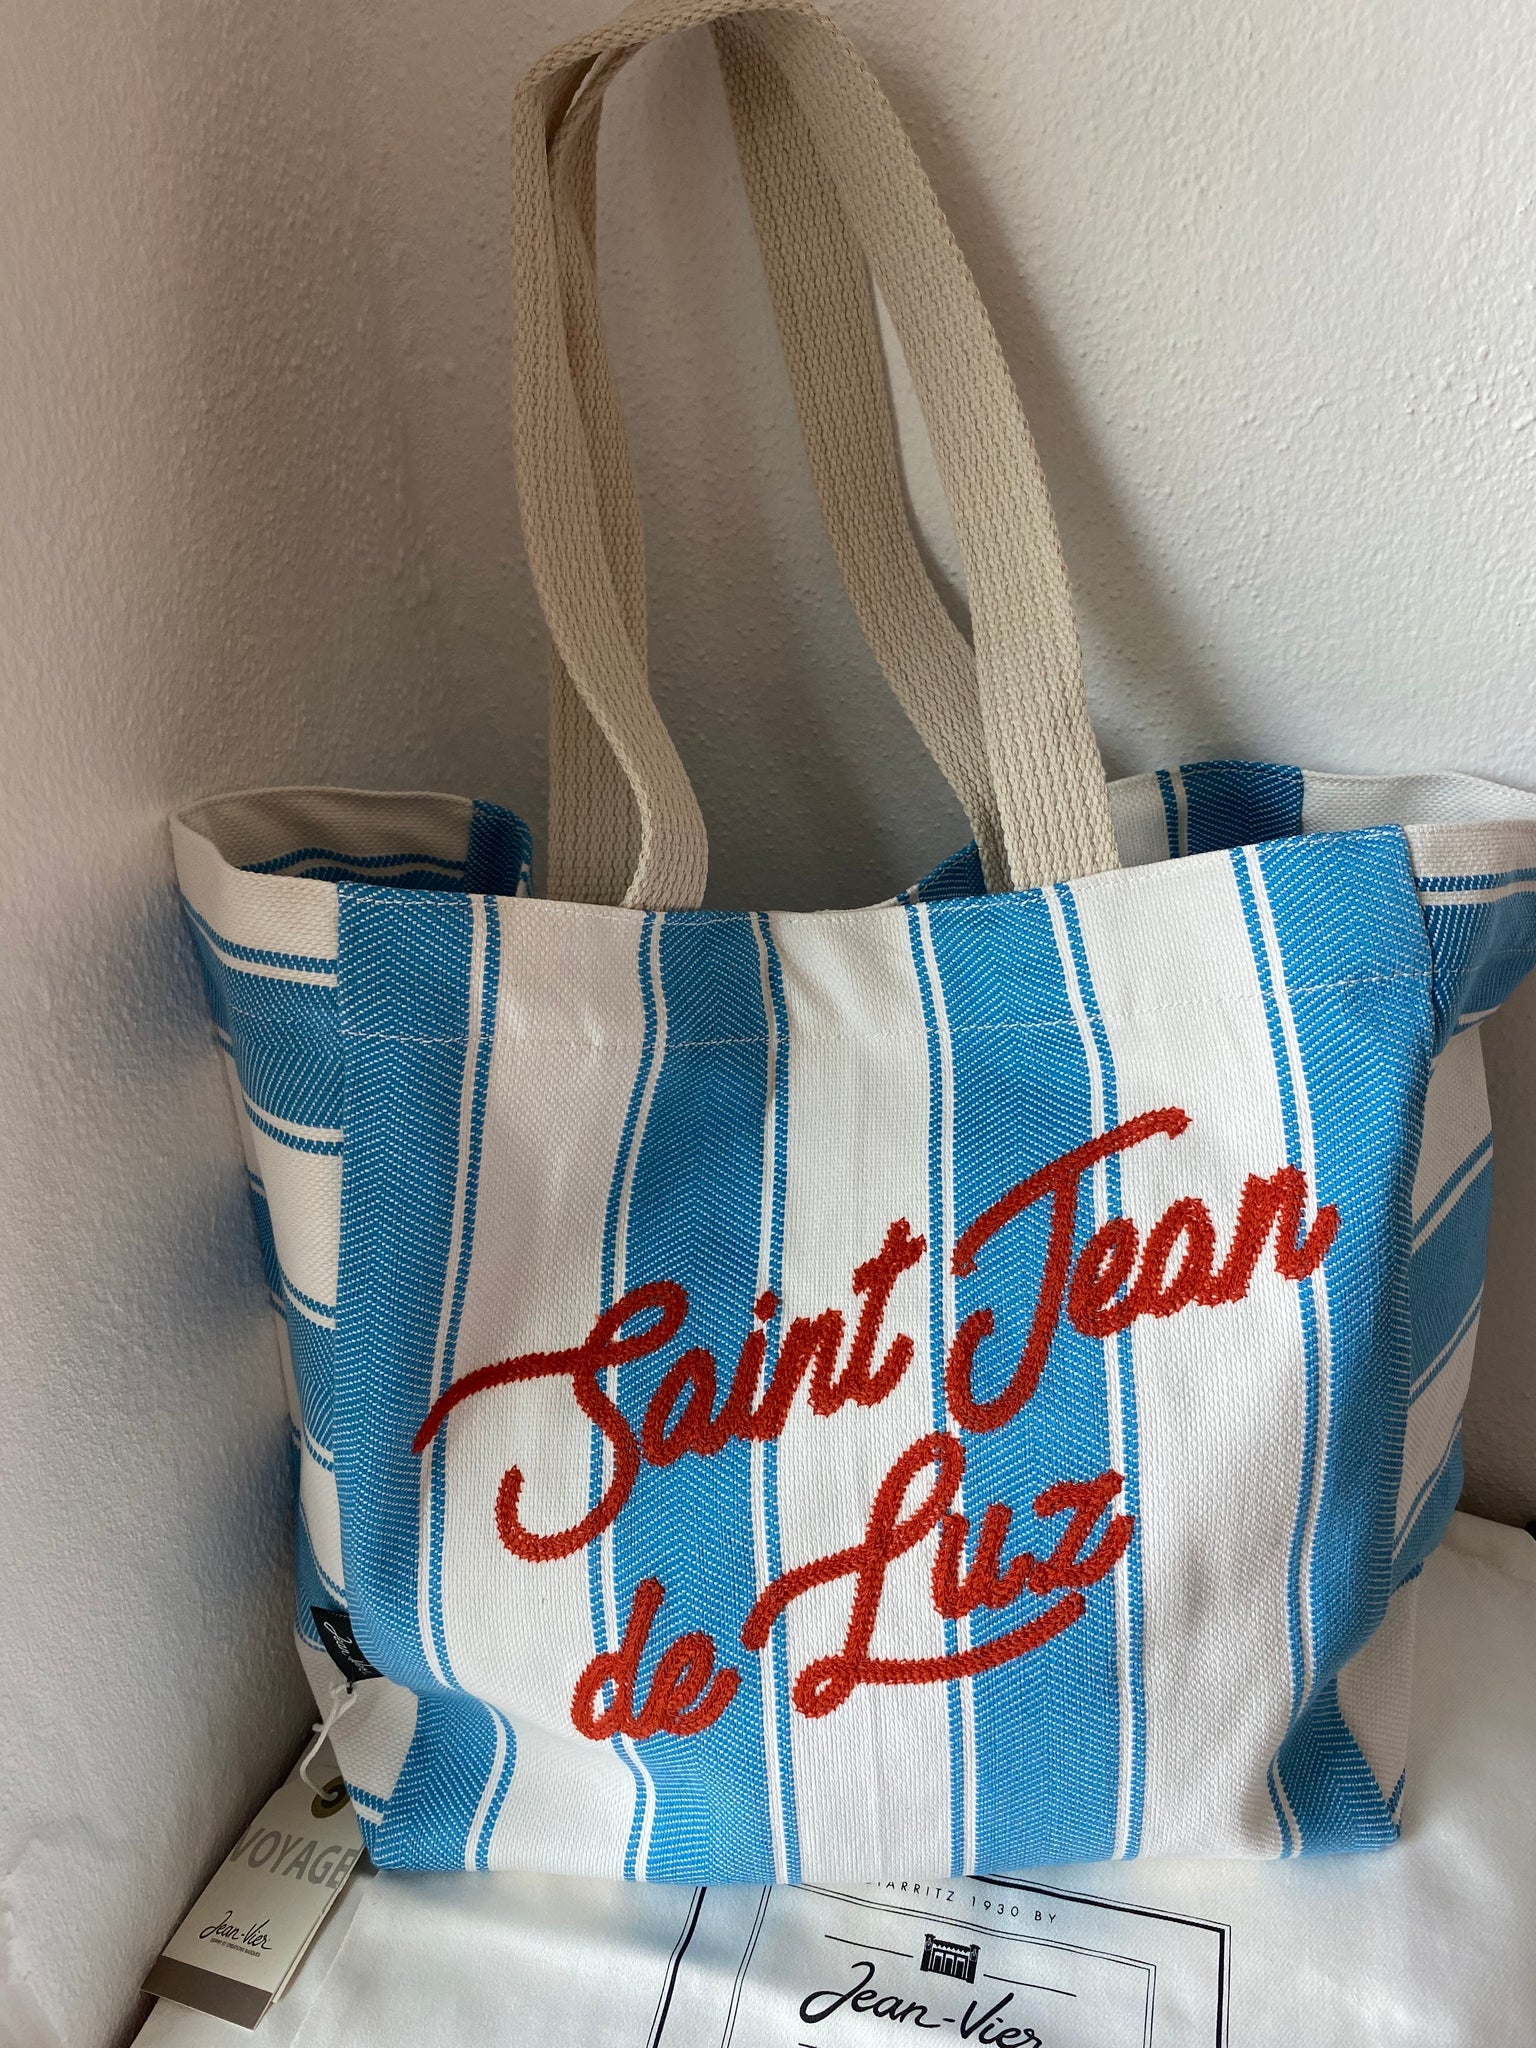 Beach bag, embroidered "Saint Jean" by Jean-Vier "Sac de Plage"